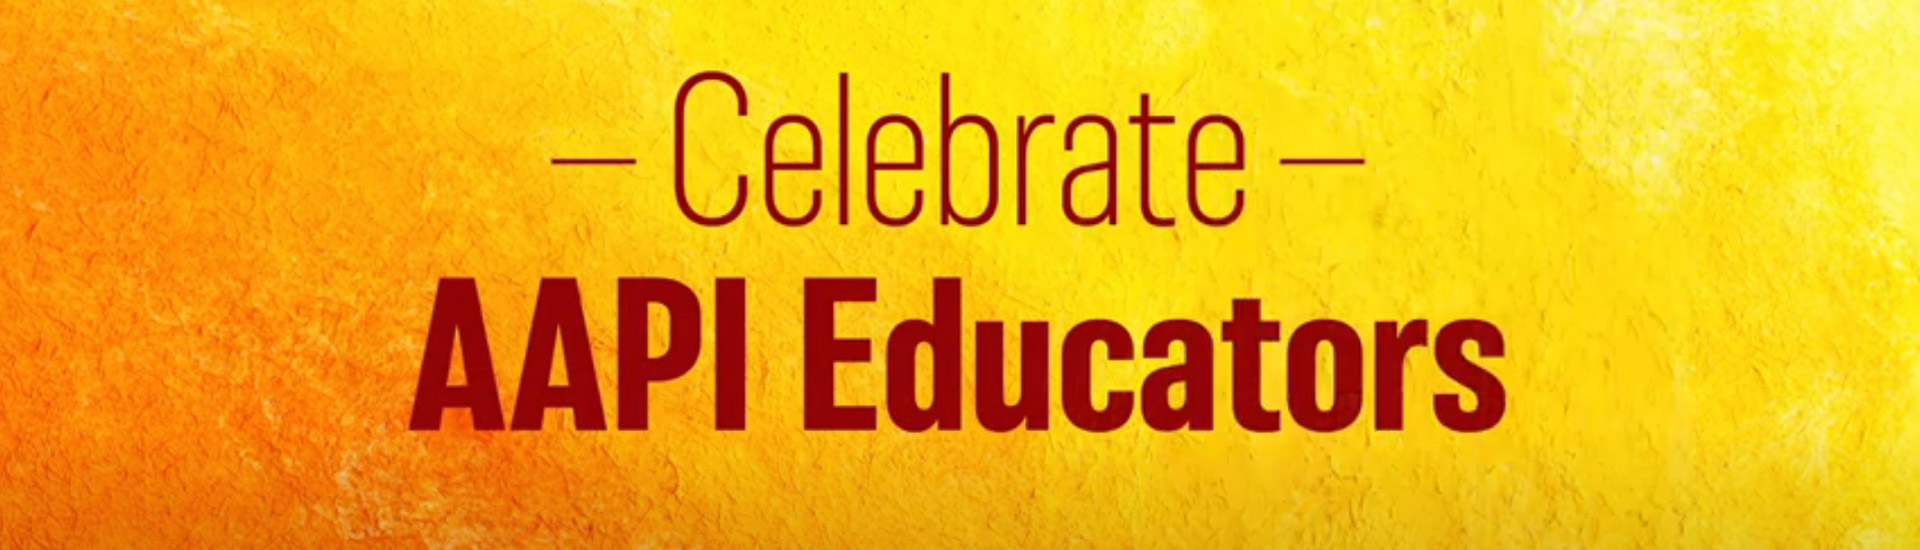 Celebrate AAPI Educators